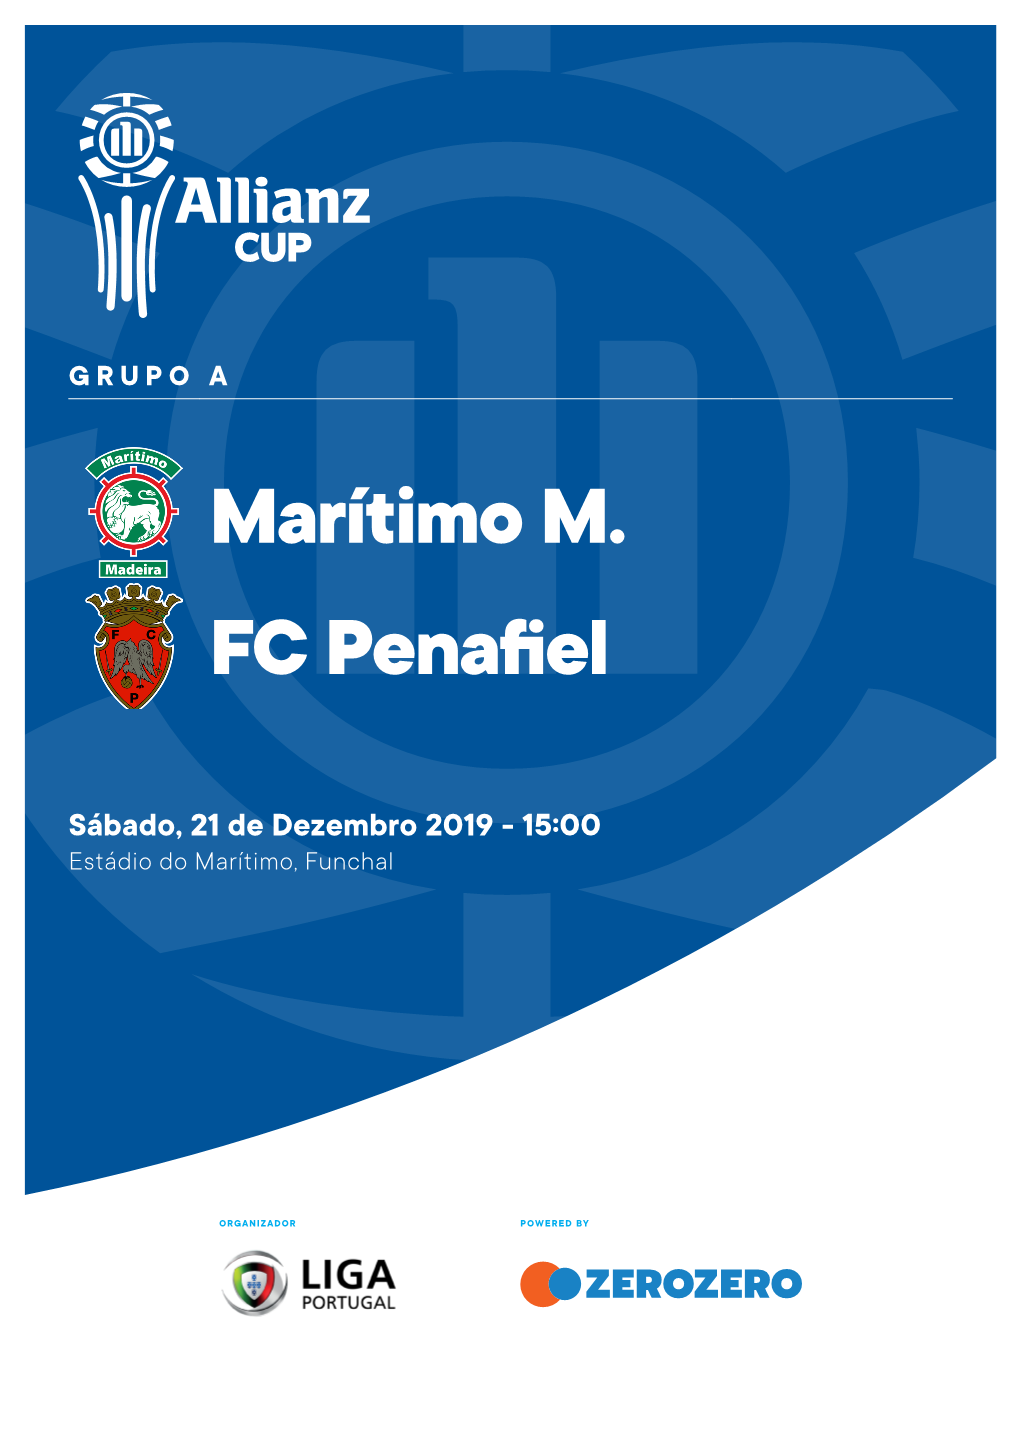 Marítimo M. FC Penafiel